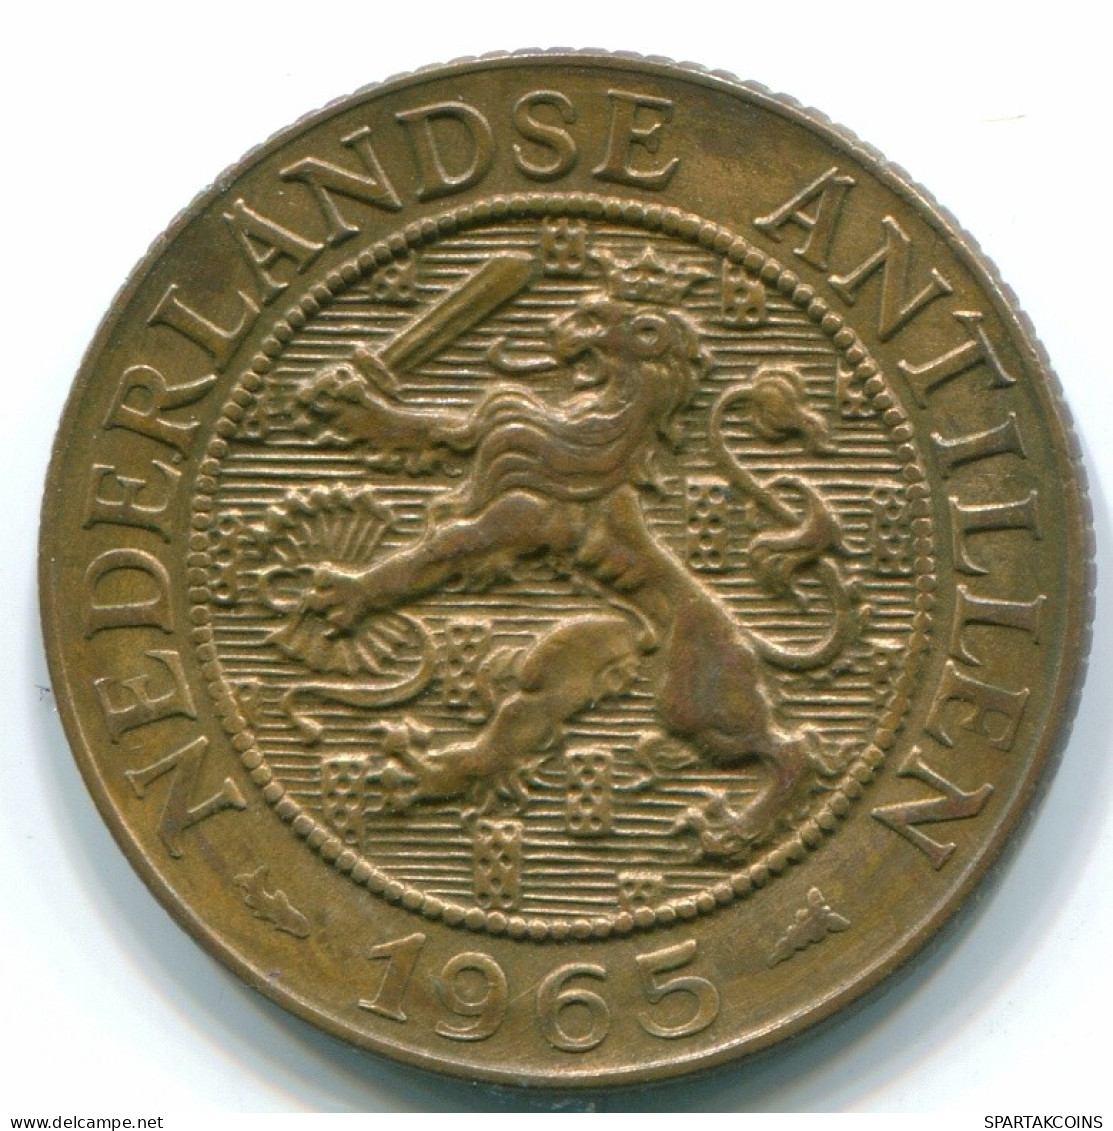 2 1/2 CENT 1965 CURACAO Netherlands Bronze Colonial Coin #S10229.U.A - Curaçao